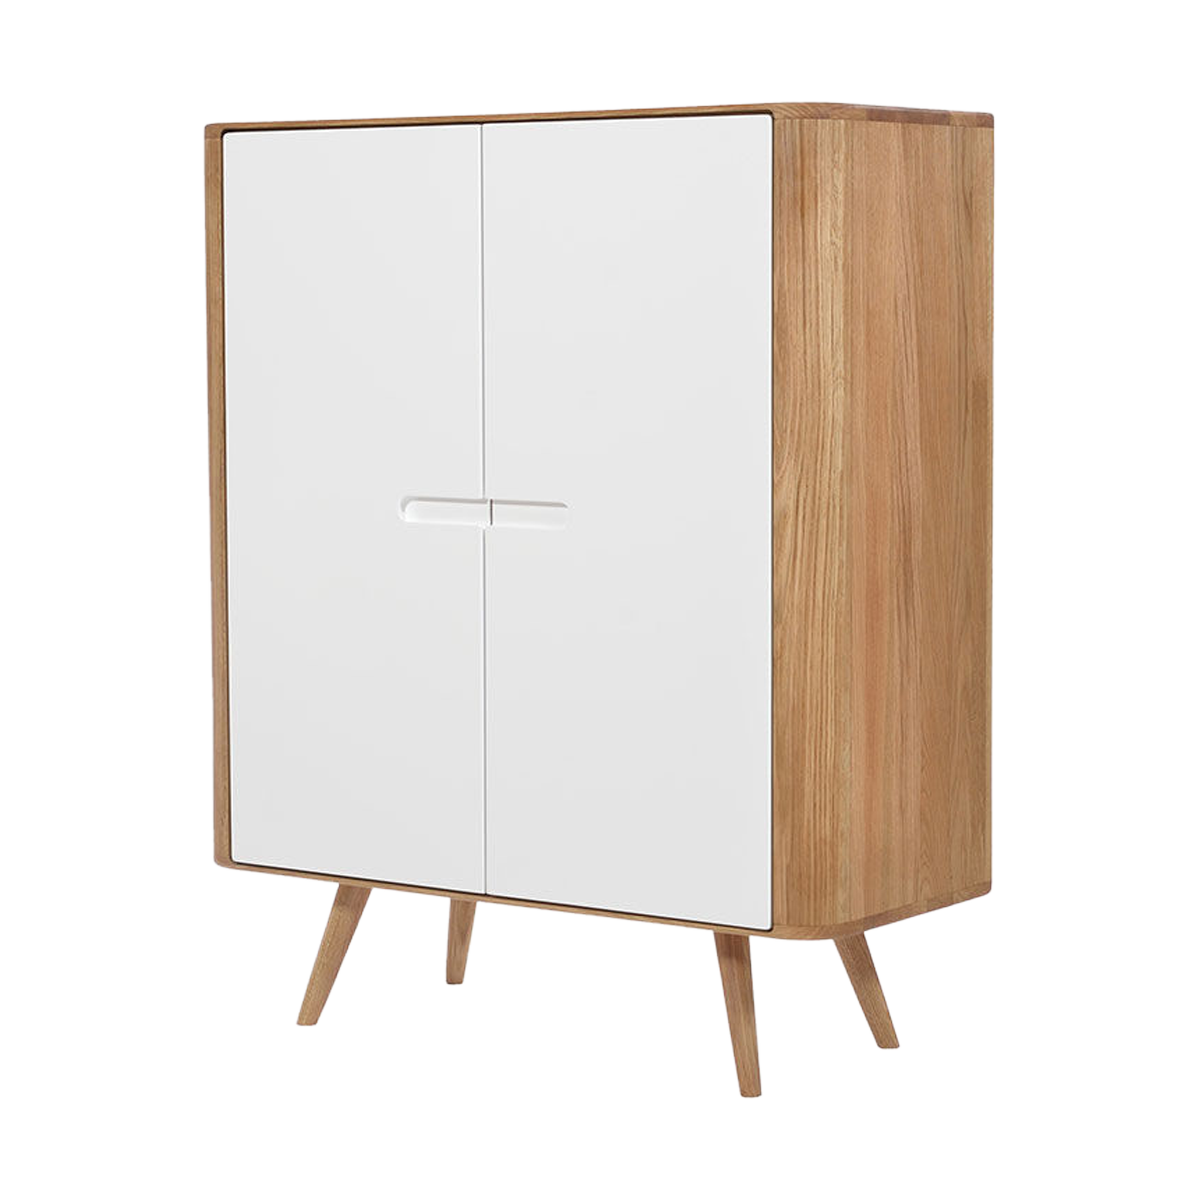 Ena cabinet houten opbergkast naturel - 90 x 110 cm